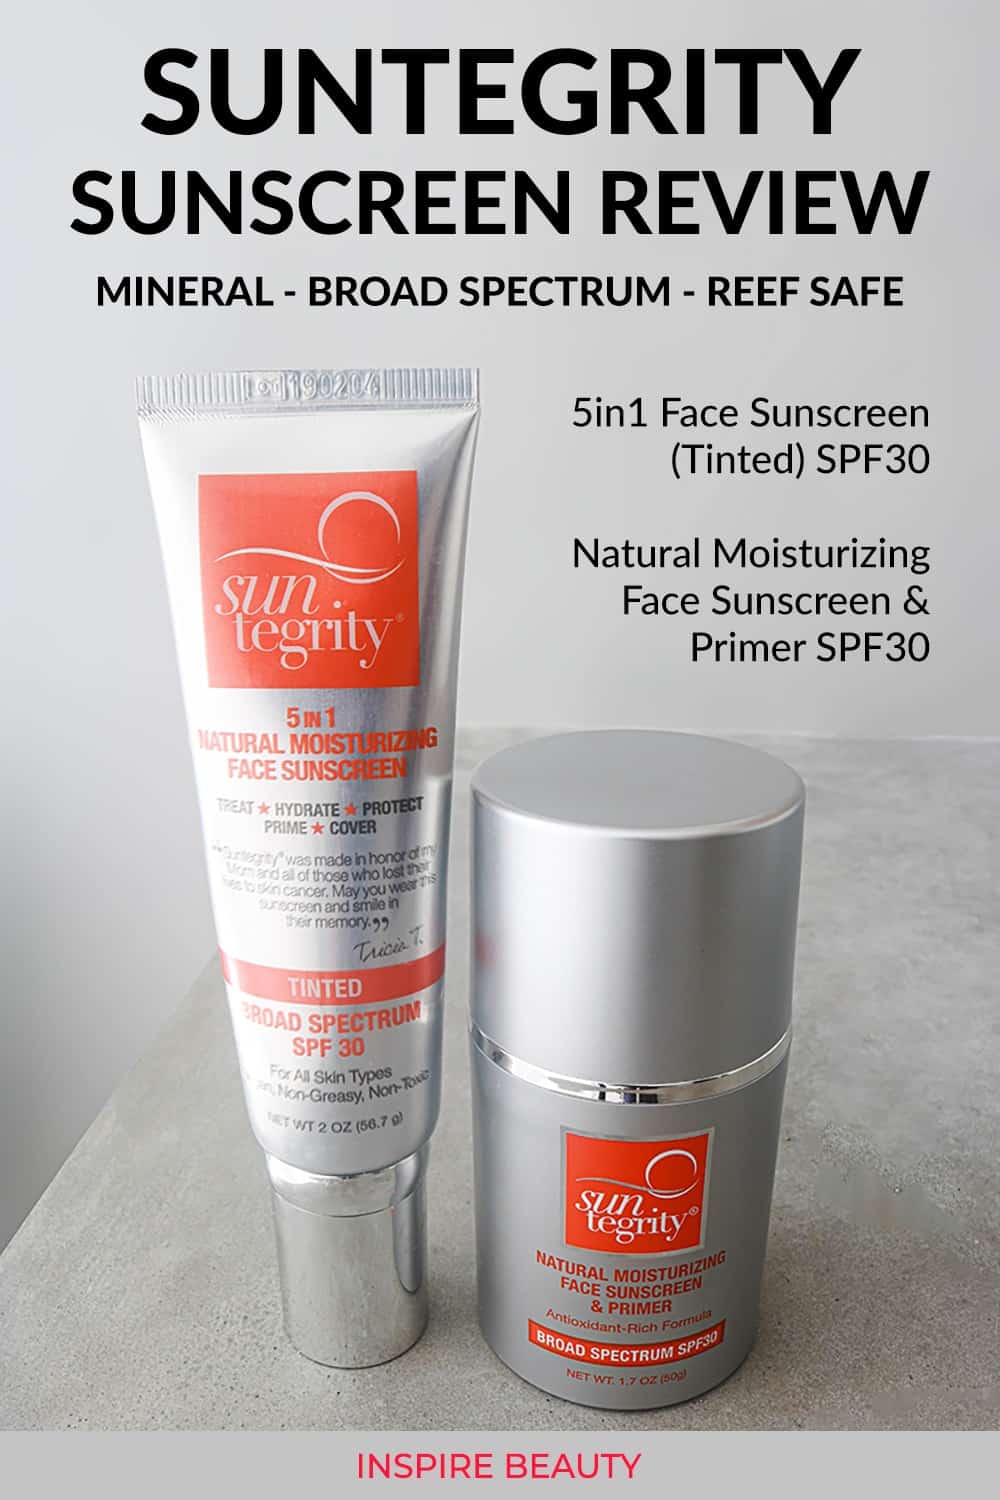 Suntegrity sunscreen reviews of 5 in 1 Sunscreen and Natural Moisturizing Face Sunscreen & Primer SPF30